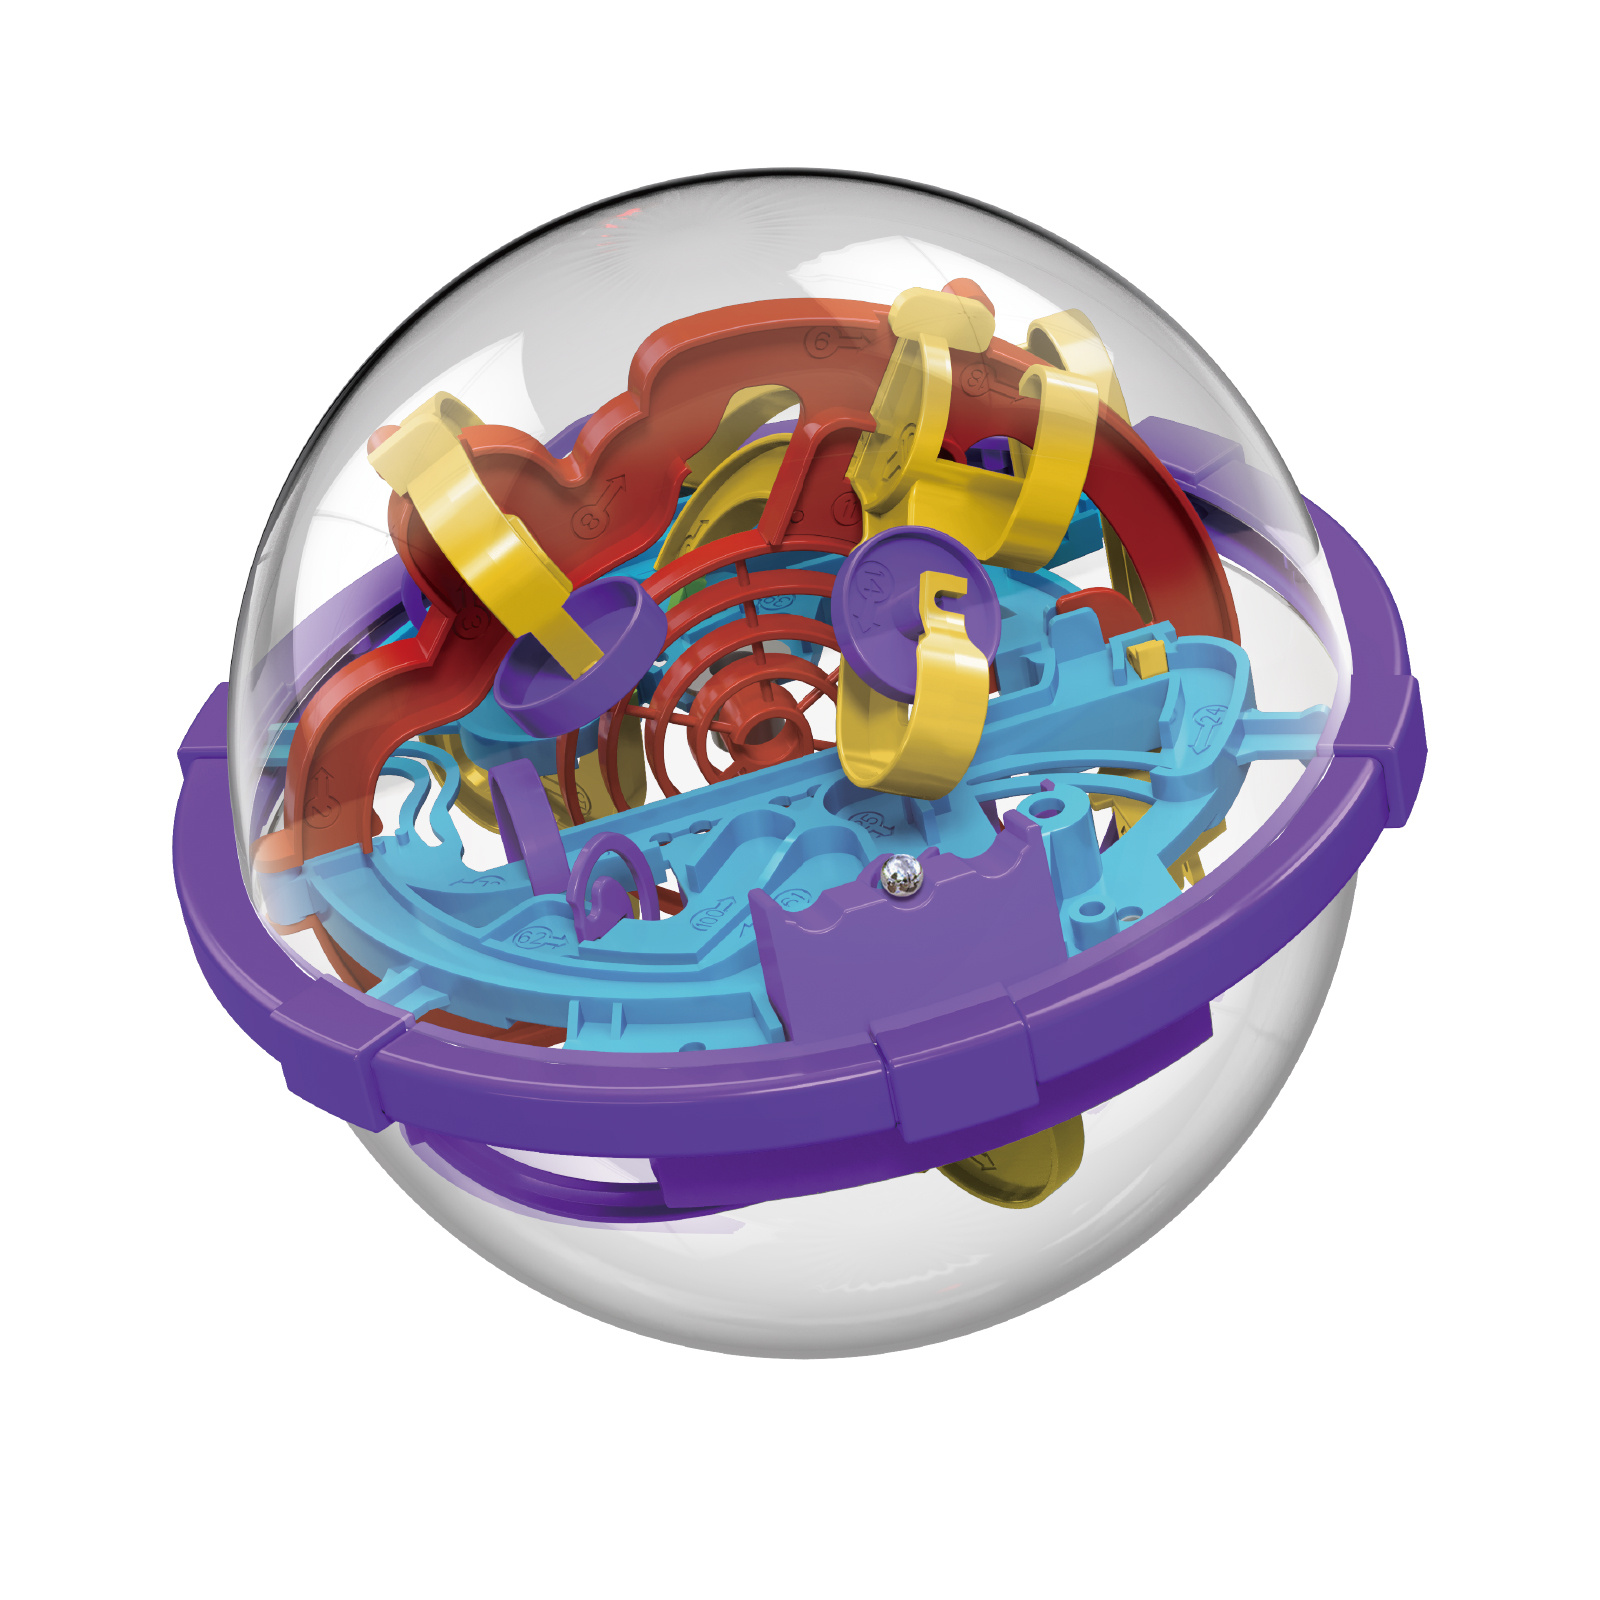 Original Perplexus 3d Ball Labyrinth Brain Thinking Games for Children  Teaser Iq 3d Games Puzzle Ball Puzzle Games Fidget Toys - AliExpress